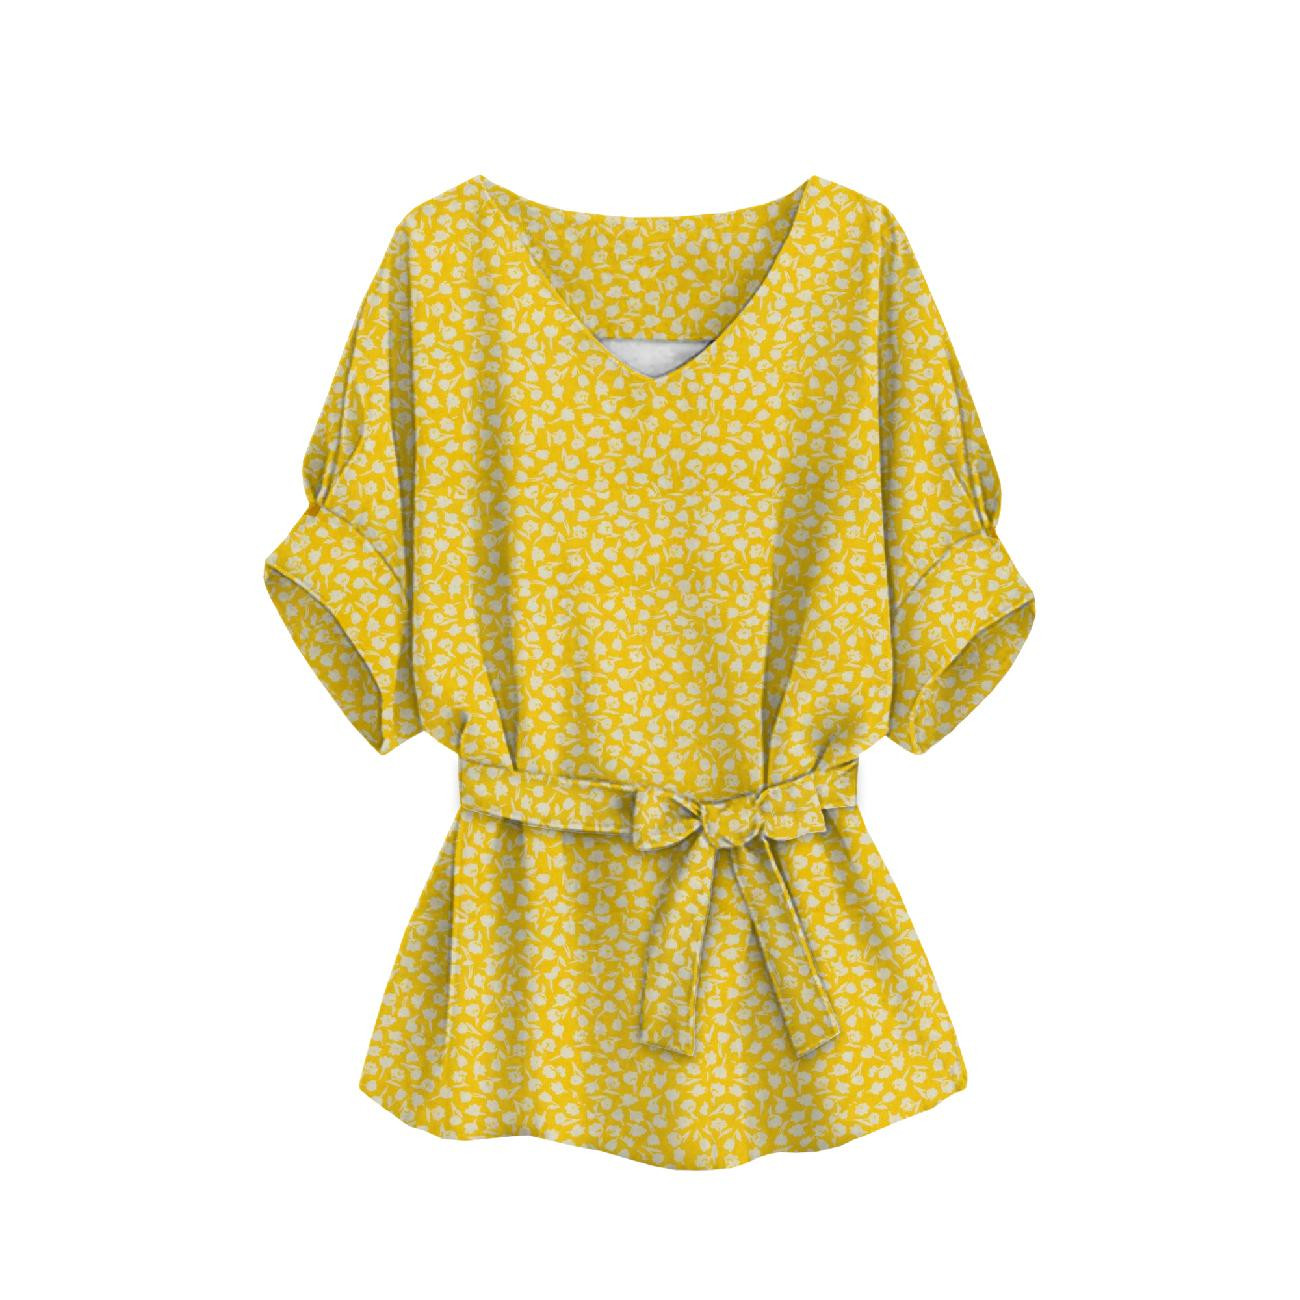 KIMONO BLOUSE - COLORFUL FLOWERS / yellow - sewing set